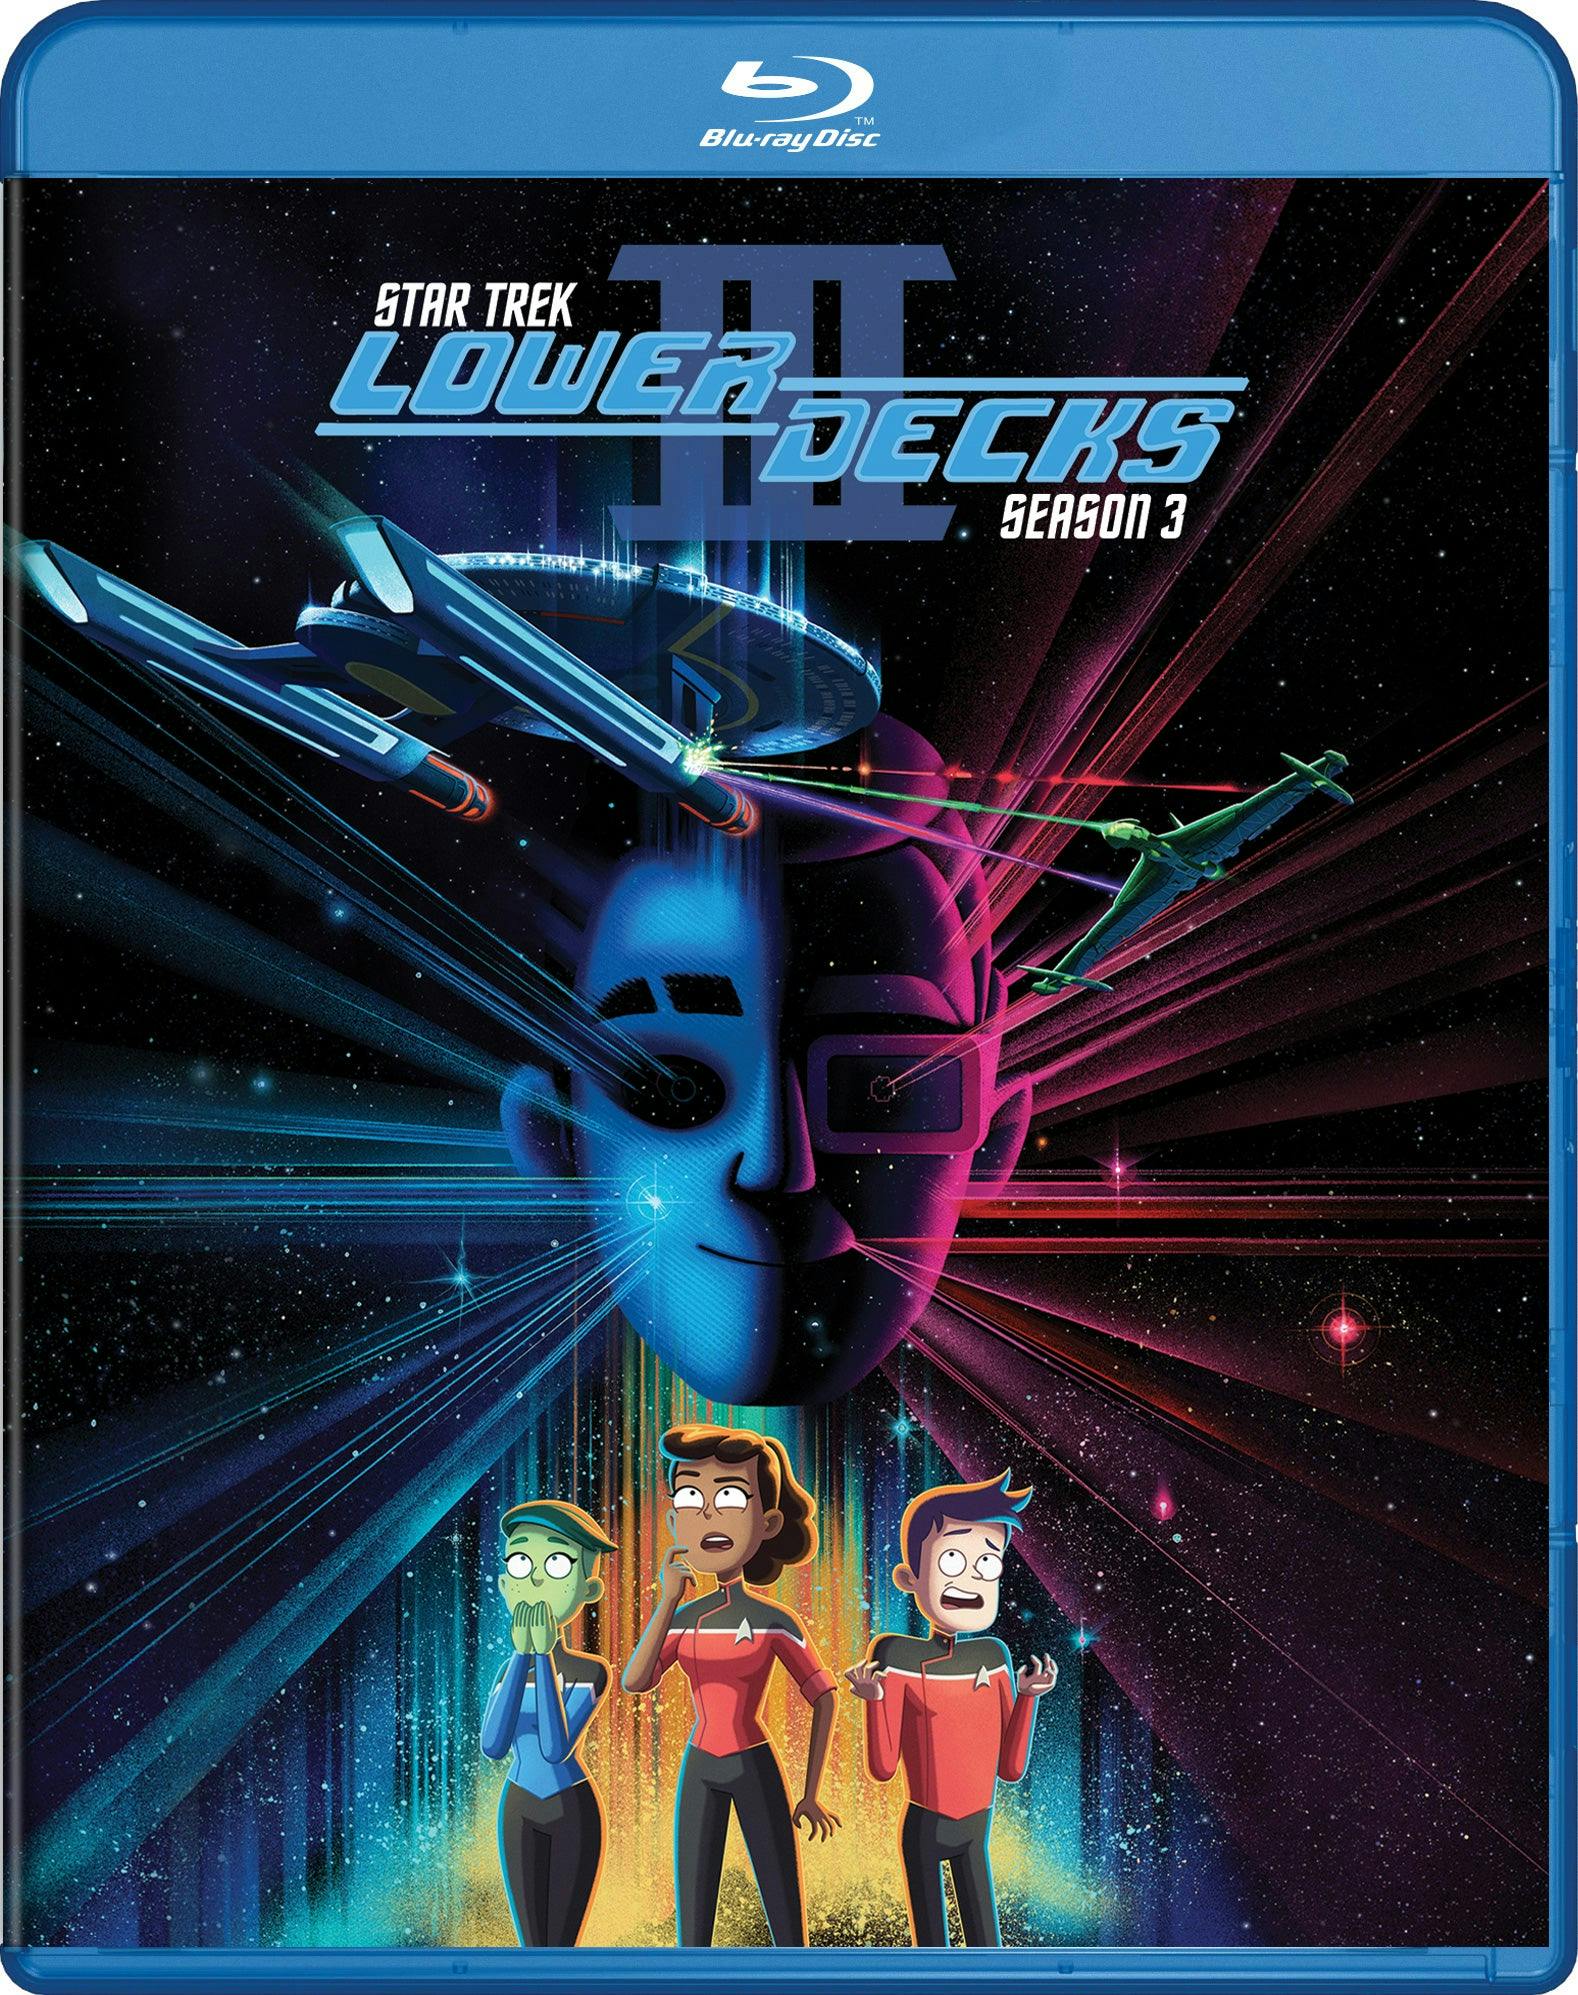 Star Trek: Lower Decks Season 3 Blu-ray packshot